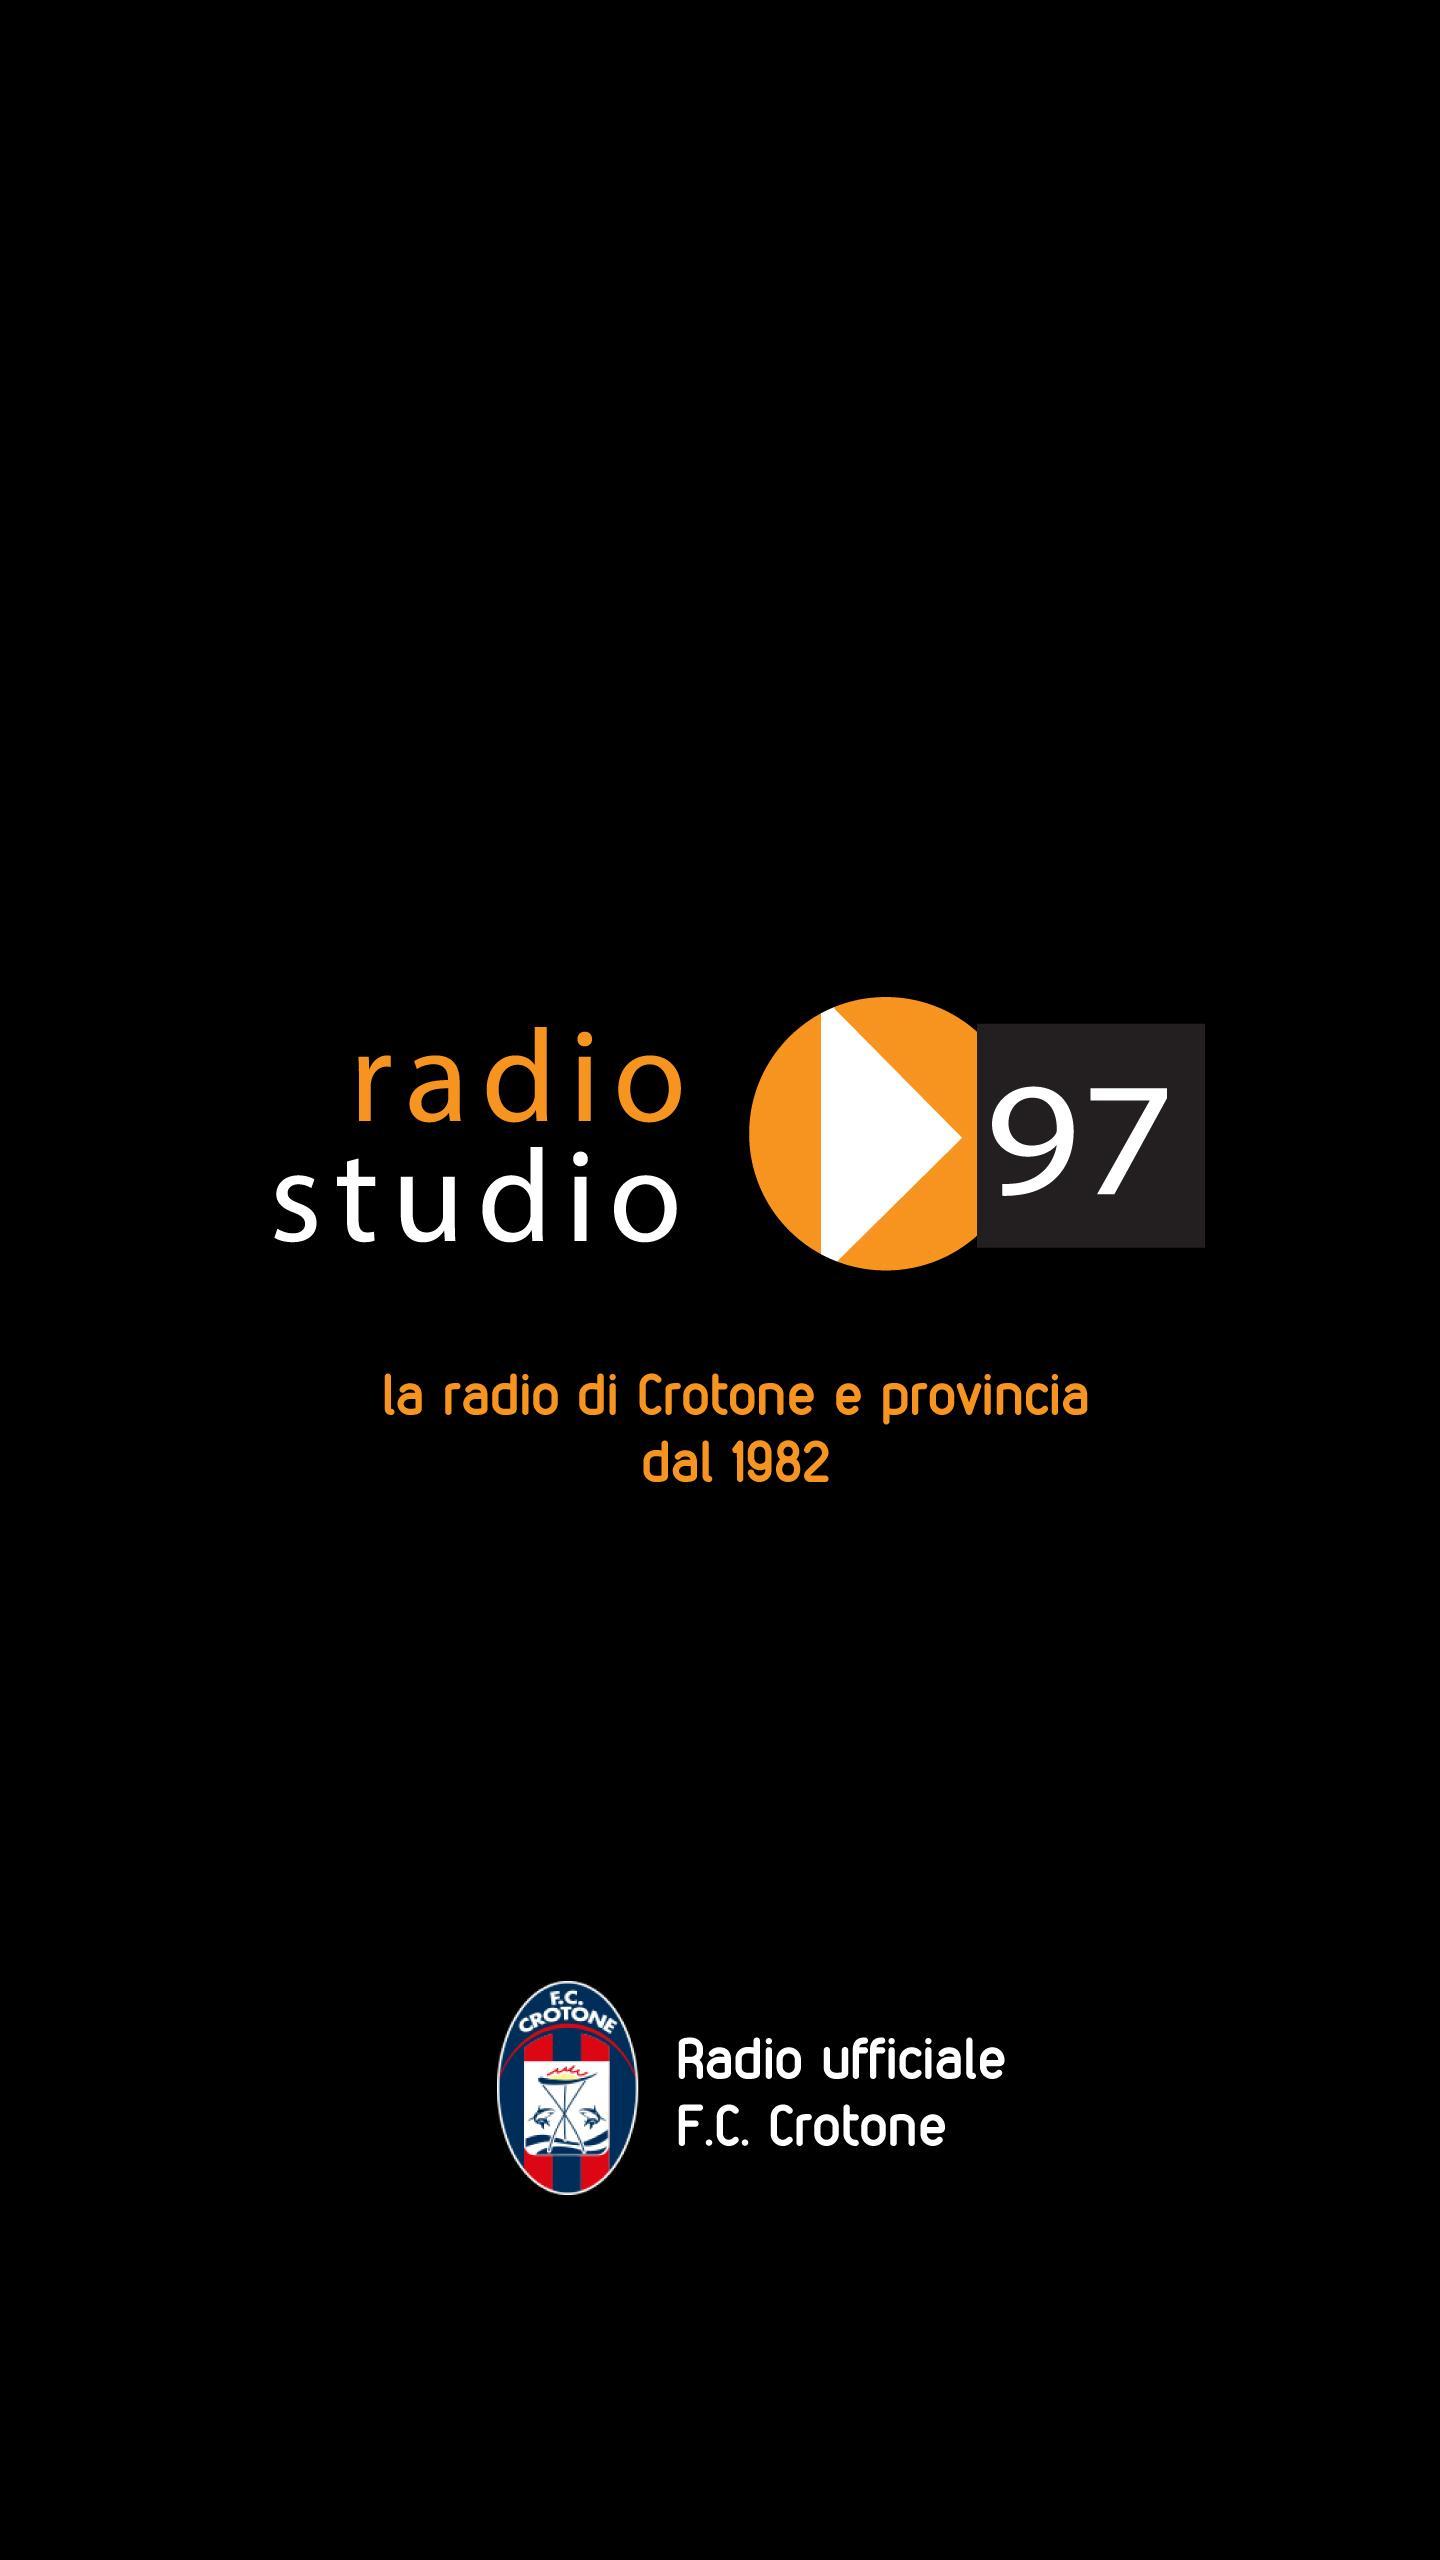 Radio Studio 97 Crotone for Android - APK Download